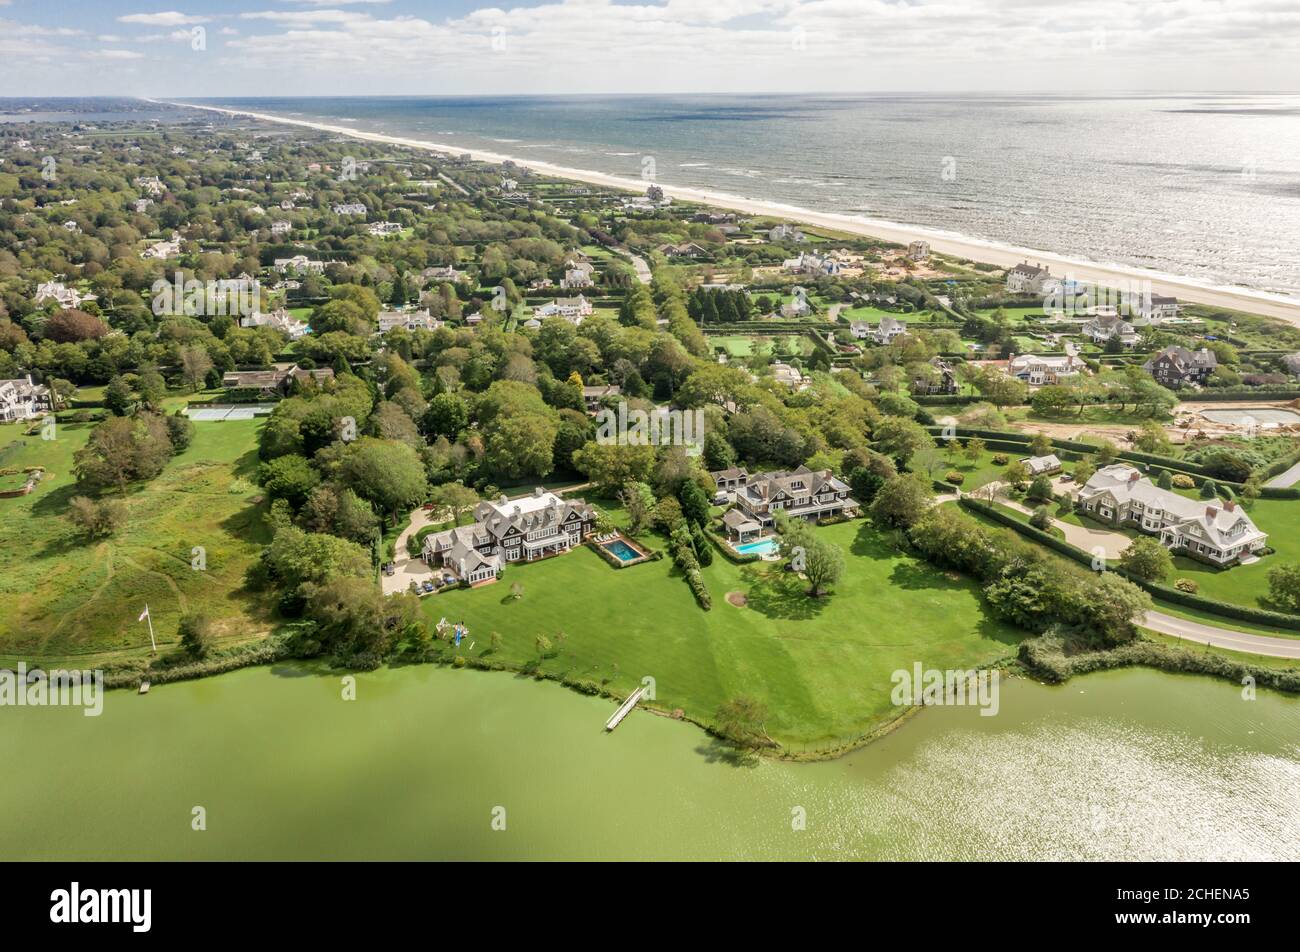 Aerial view of estates near the ocean in Southampton, NY Stock Photo